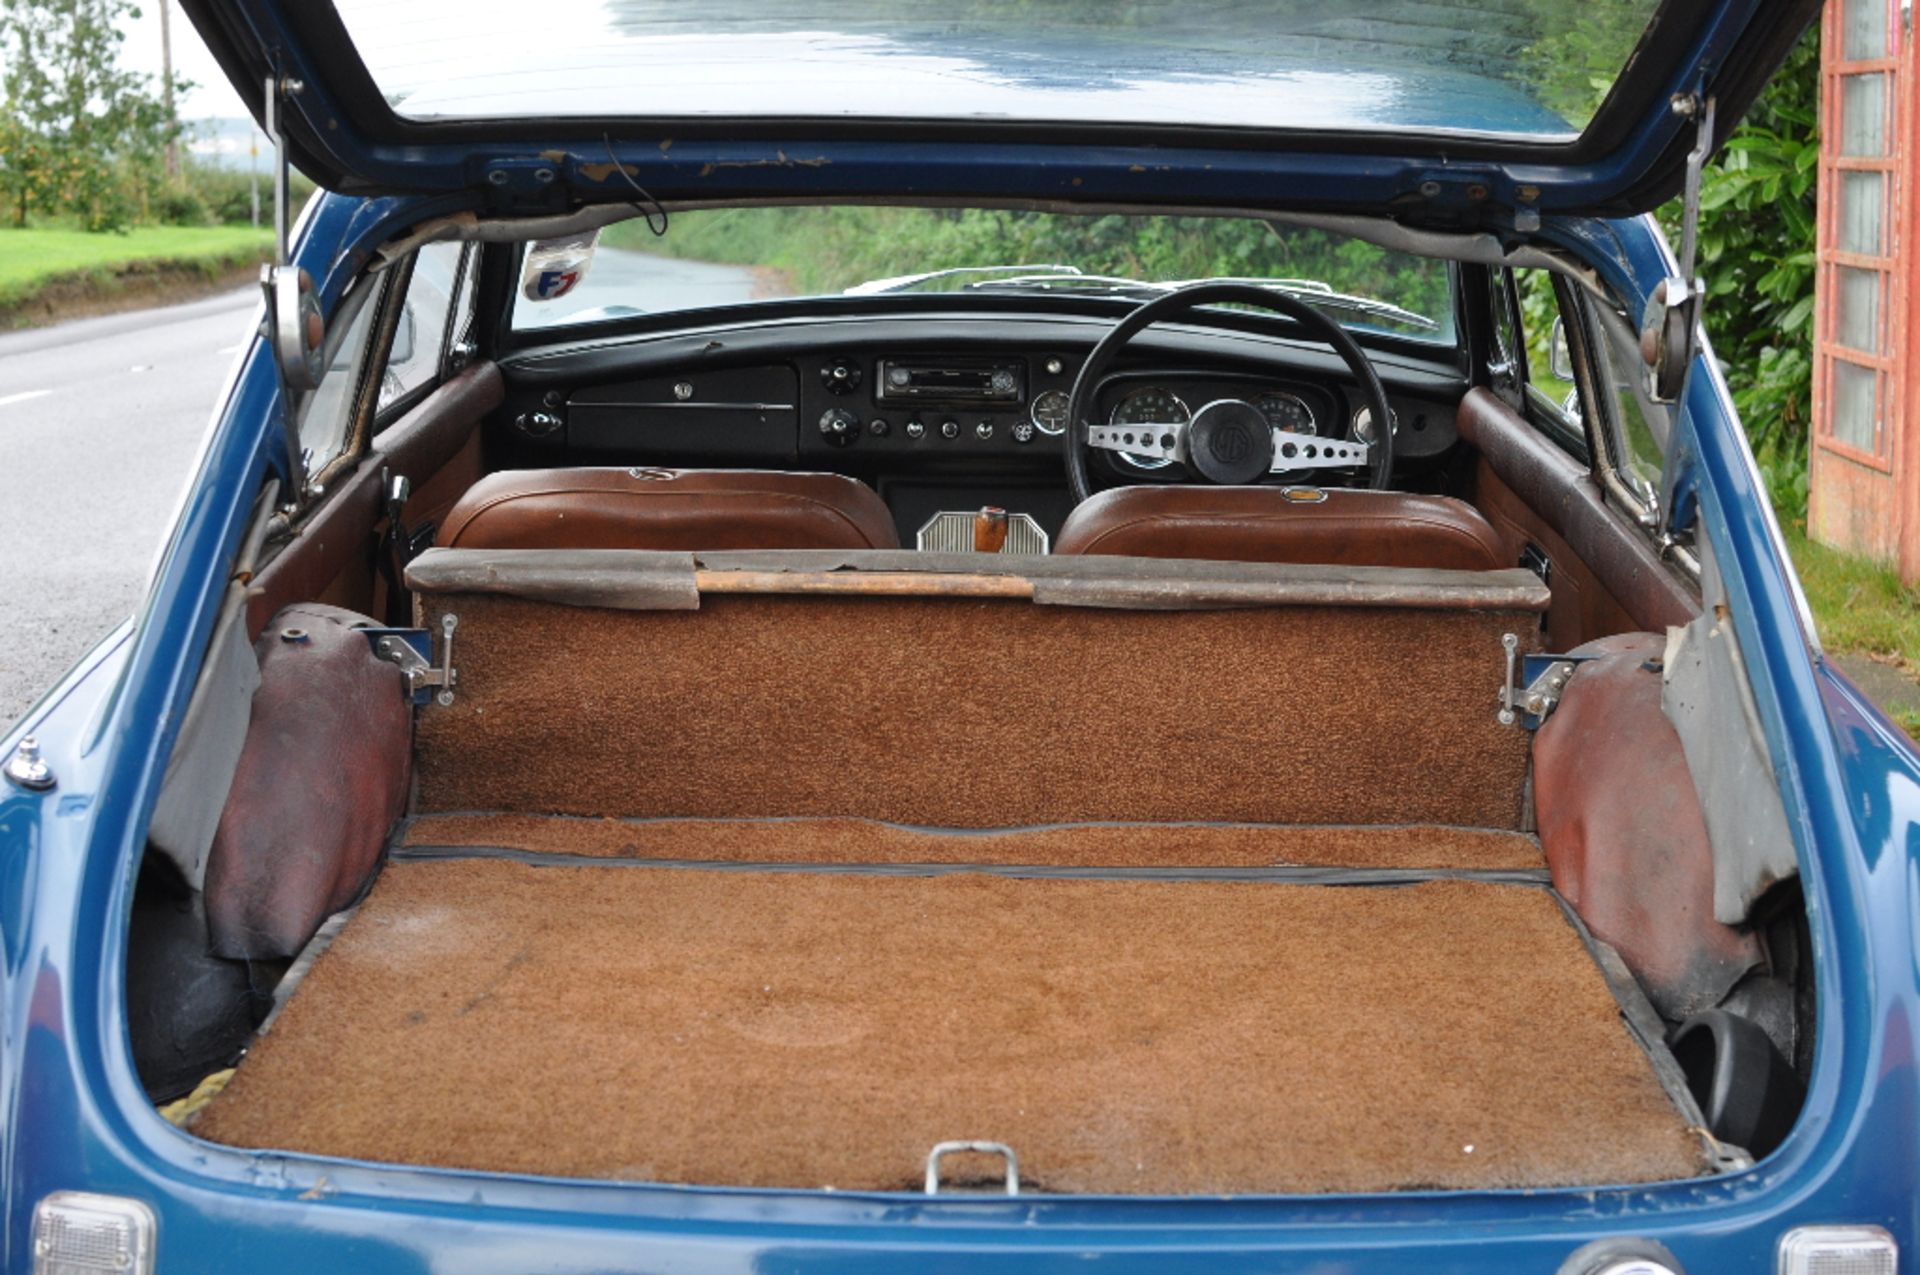 A 1971 MG B GT, registration number NPO 505J, teal blue. - Image 4 of 6